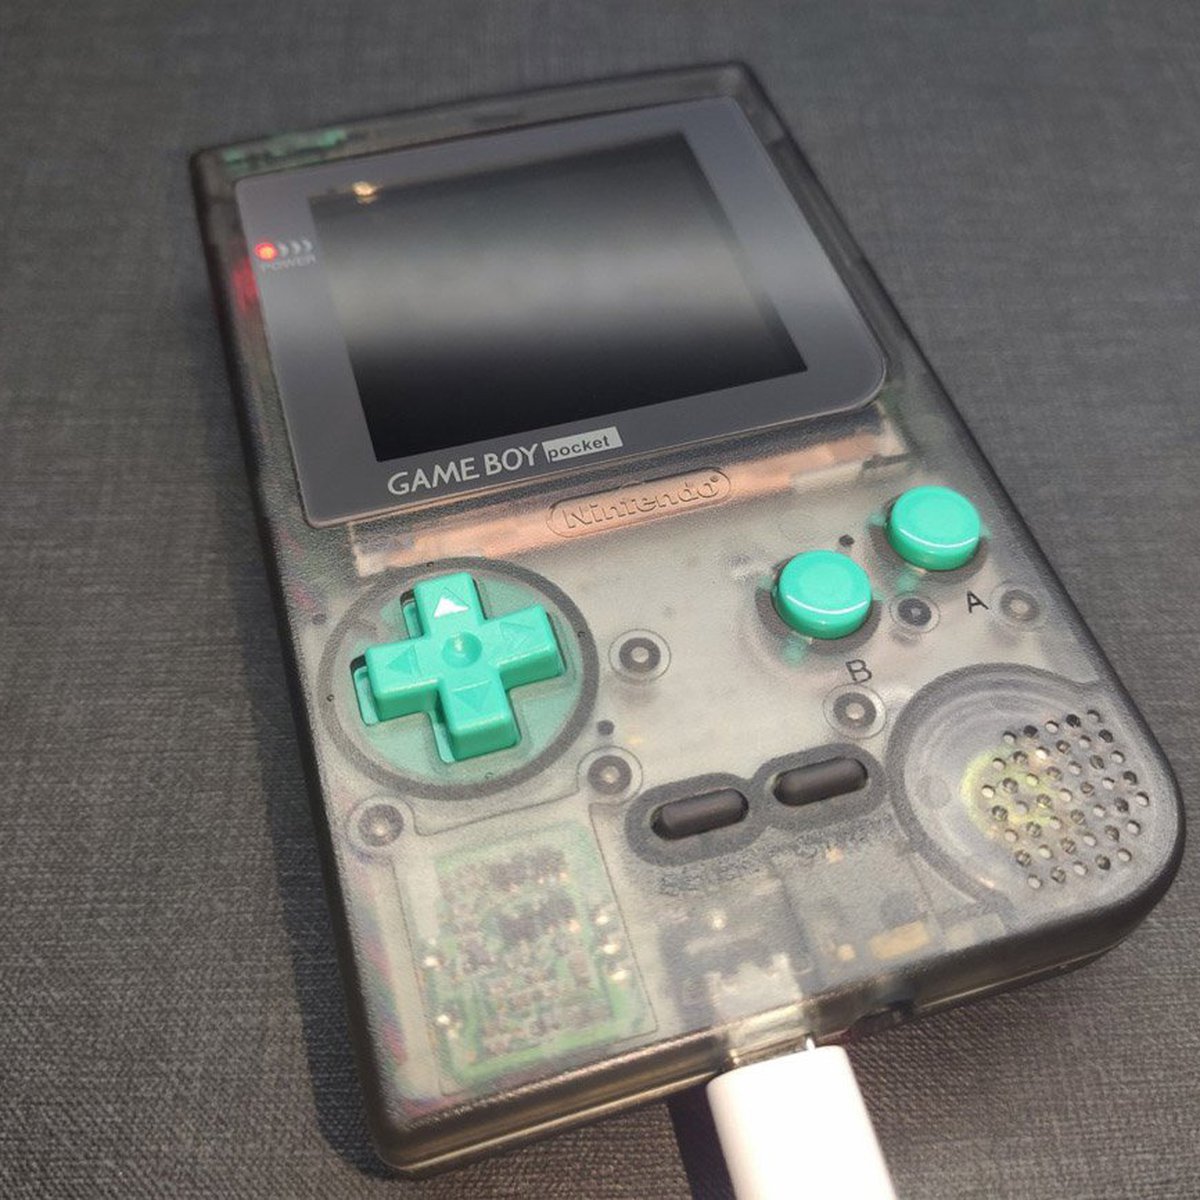 Tyr Søg kaskade Game Boy Pocket: USB-C Charging Kit from The giltesa's shop on Tindie